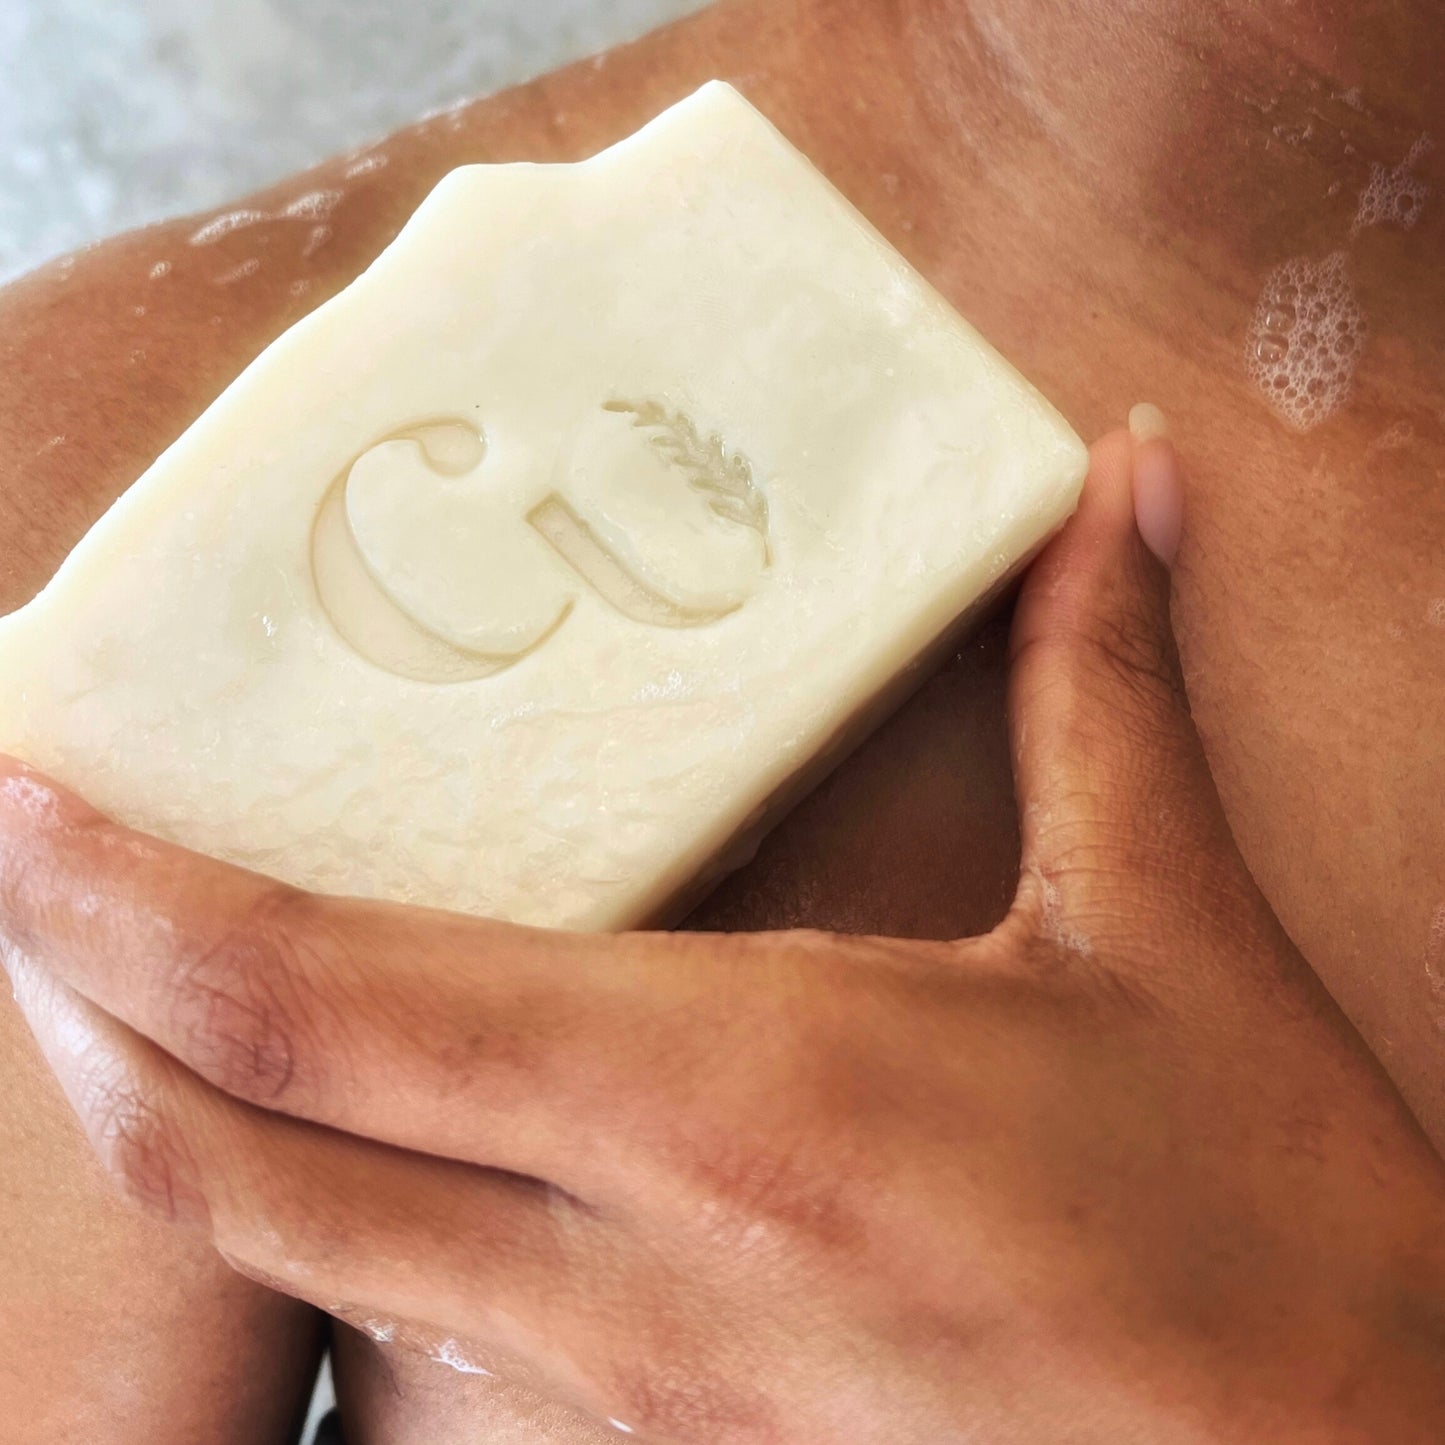 Bathing with eucalyptus mint soap, indulging in its invigorating scent and rejuvenating properties." Cherish U®